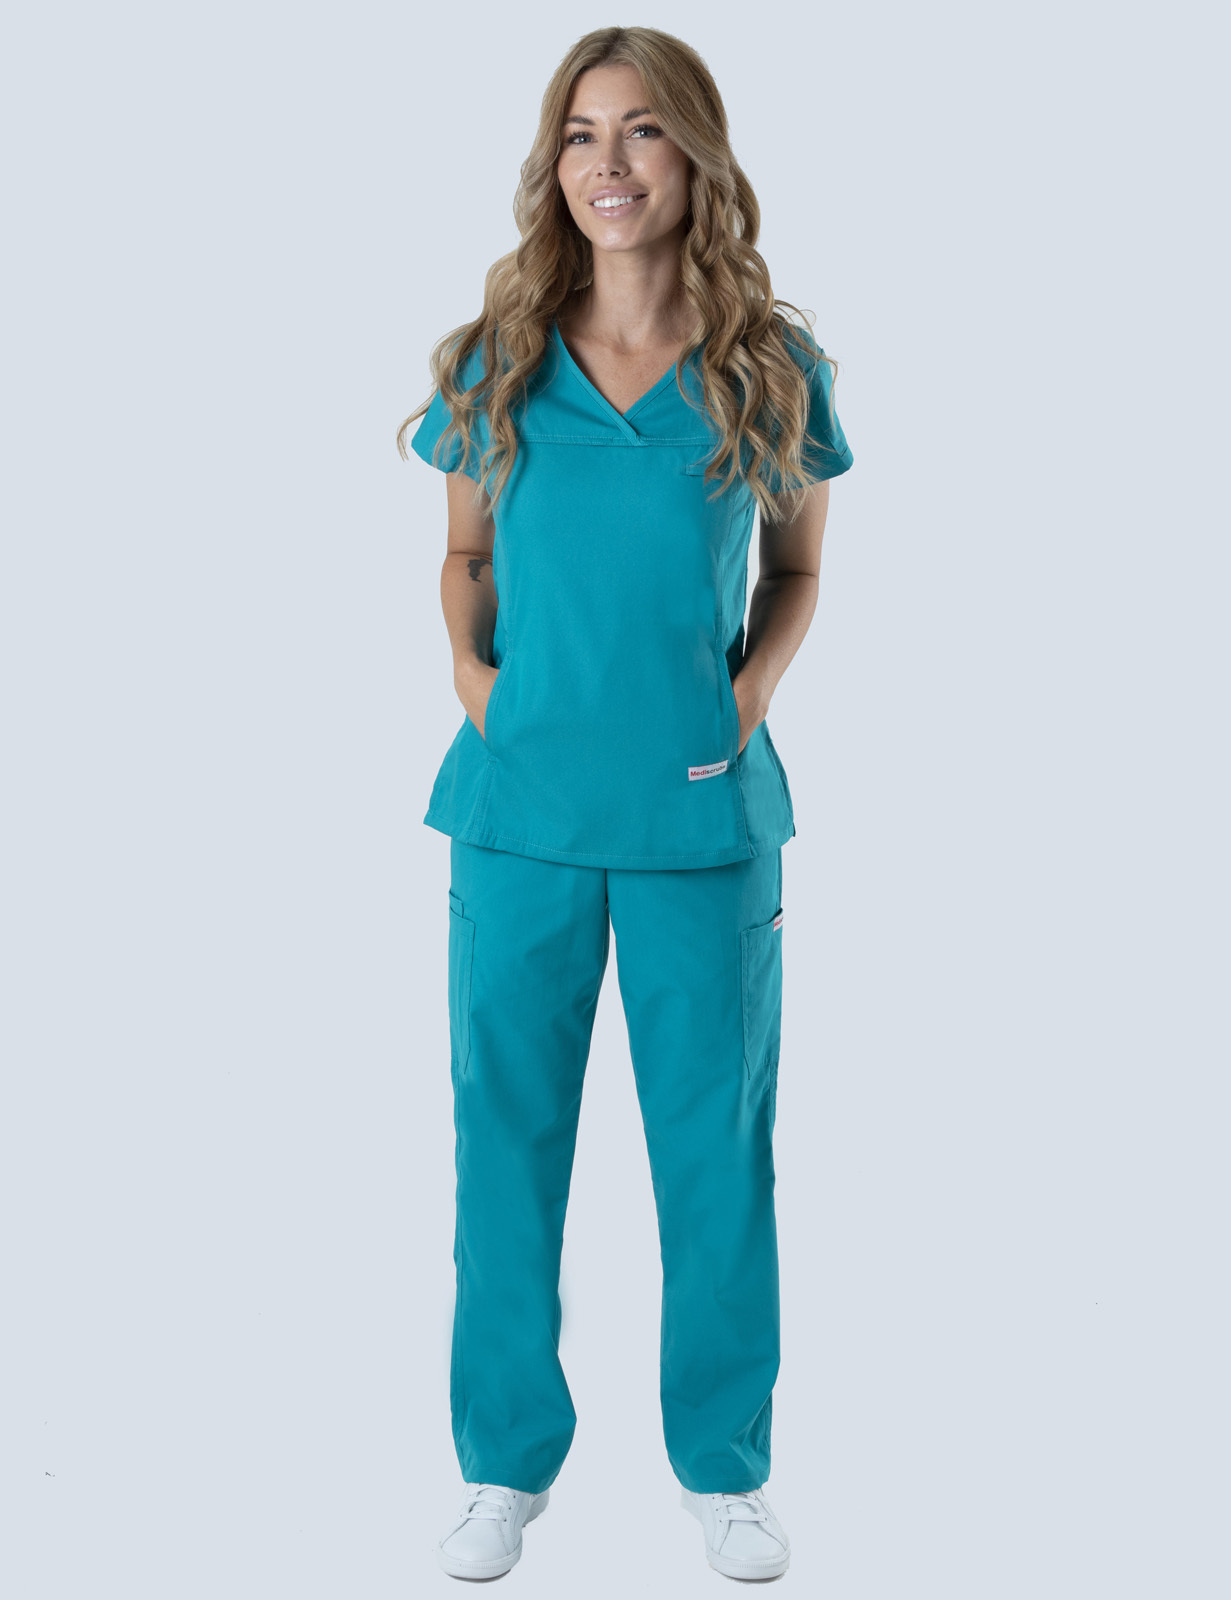 Belmont Private Hospital - ECT Registered Nurse Uniform Set Bundle (Women's Fit Solid Top and Cargo Pants in Teal + Logos)